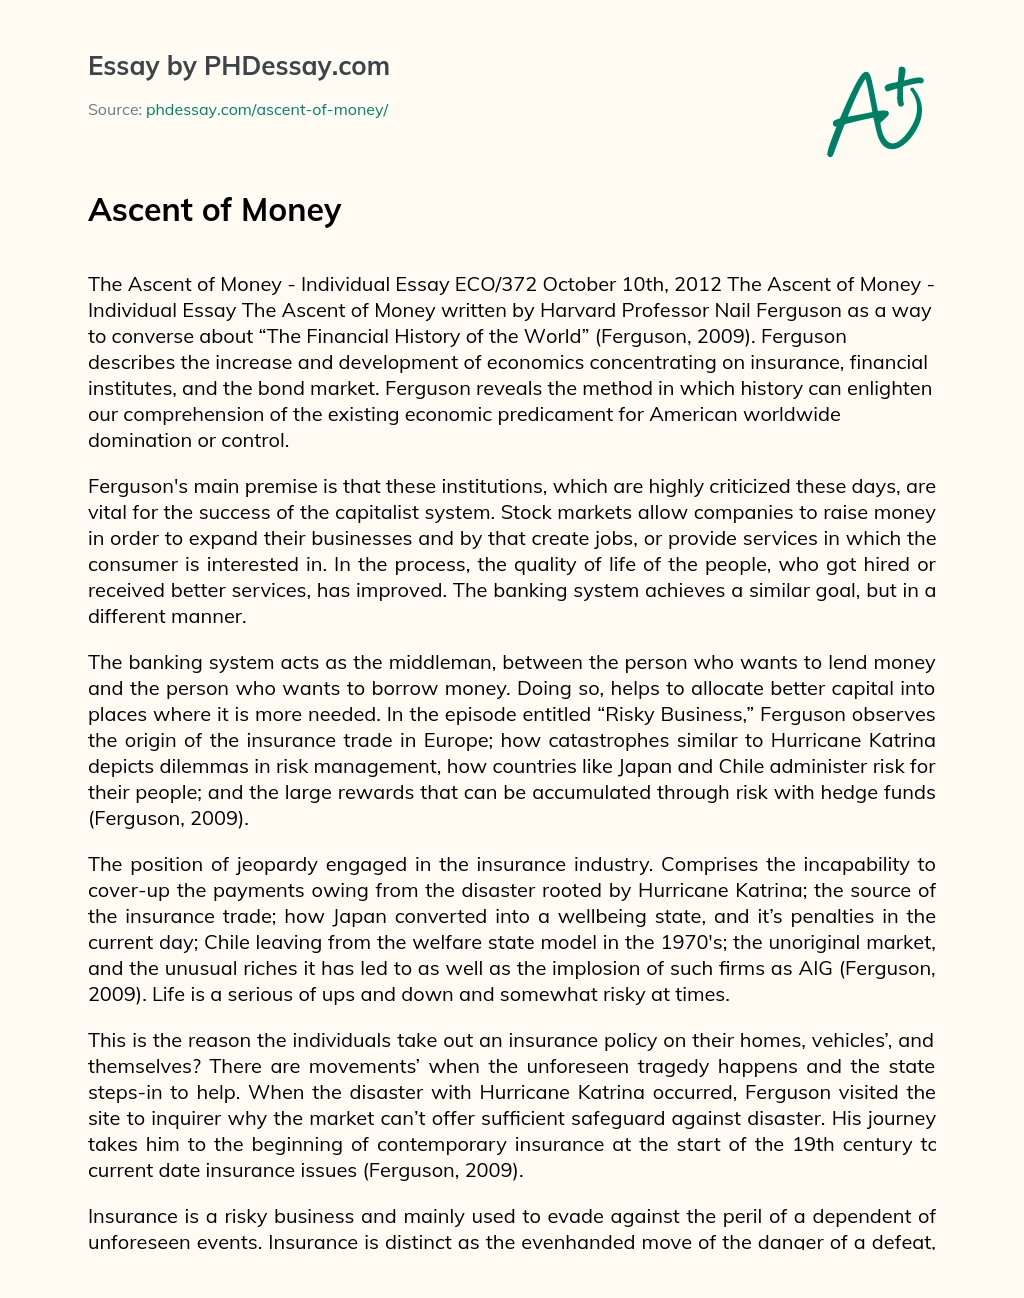 Ascent of Money essay